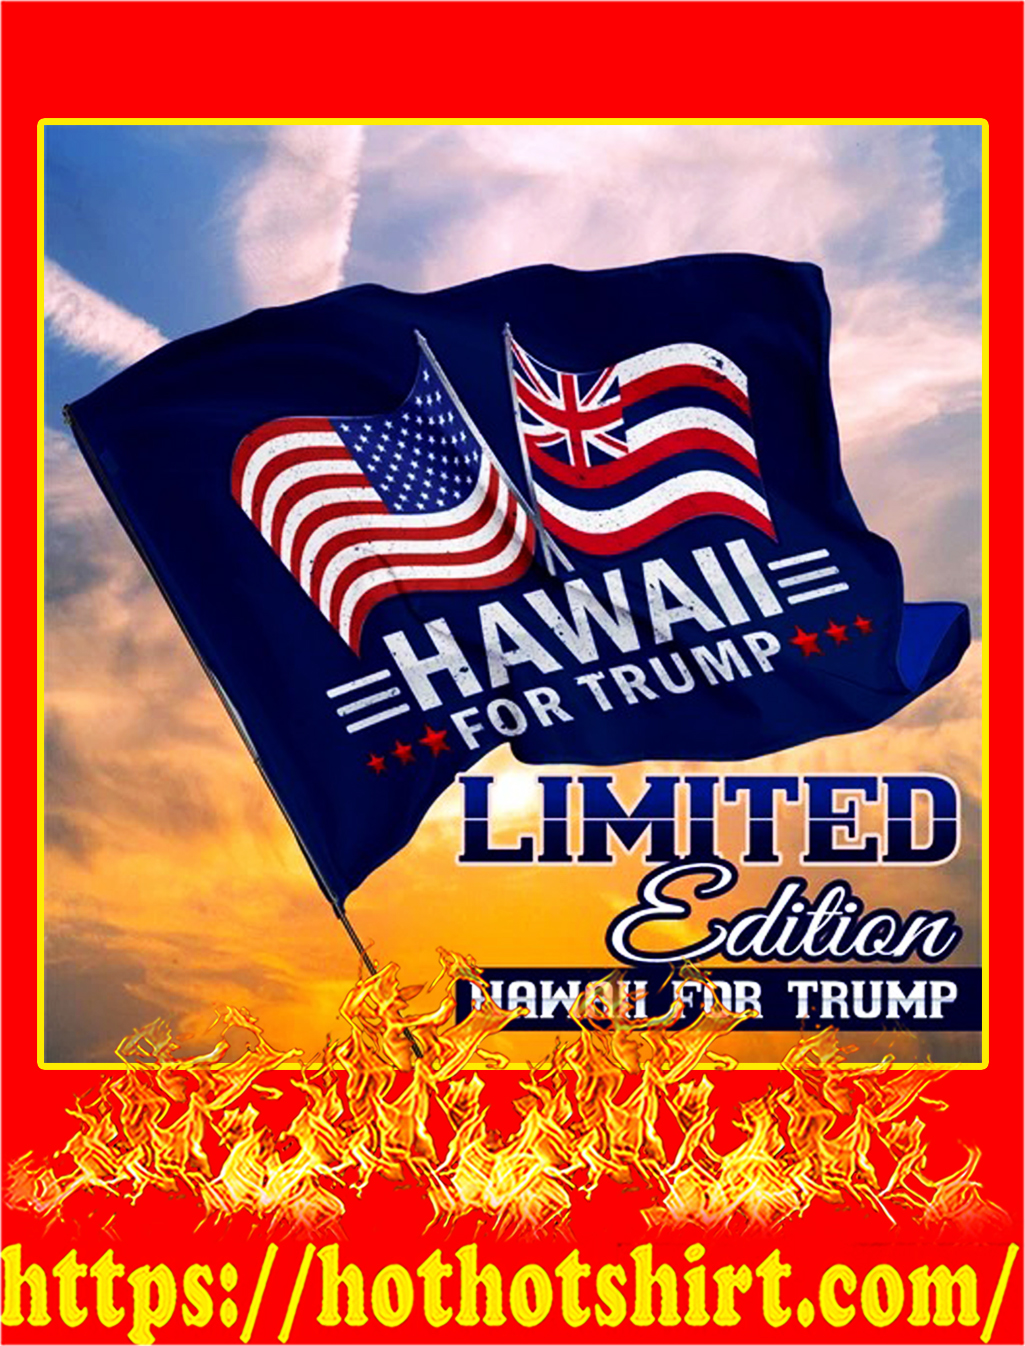 Hawaii for trump flag